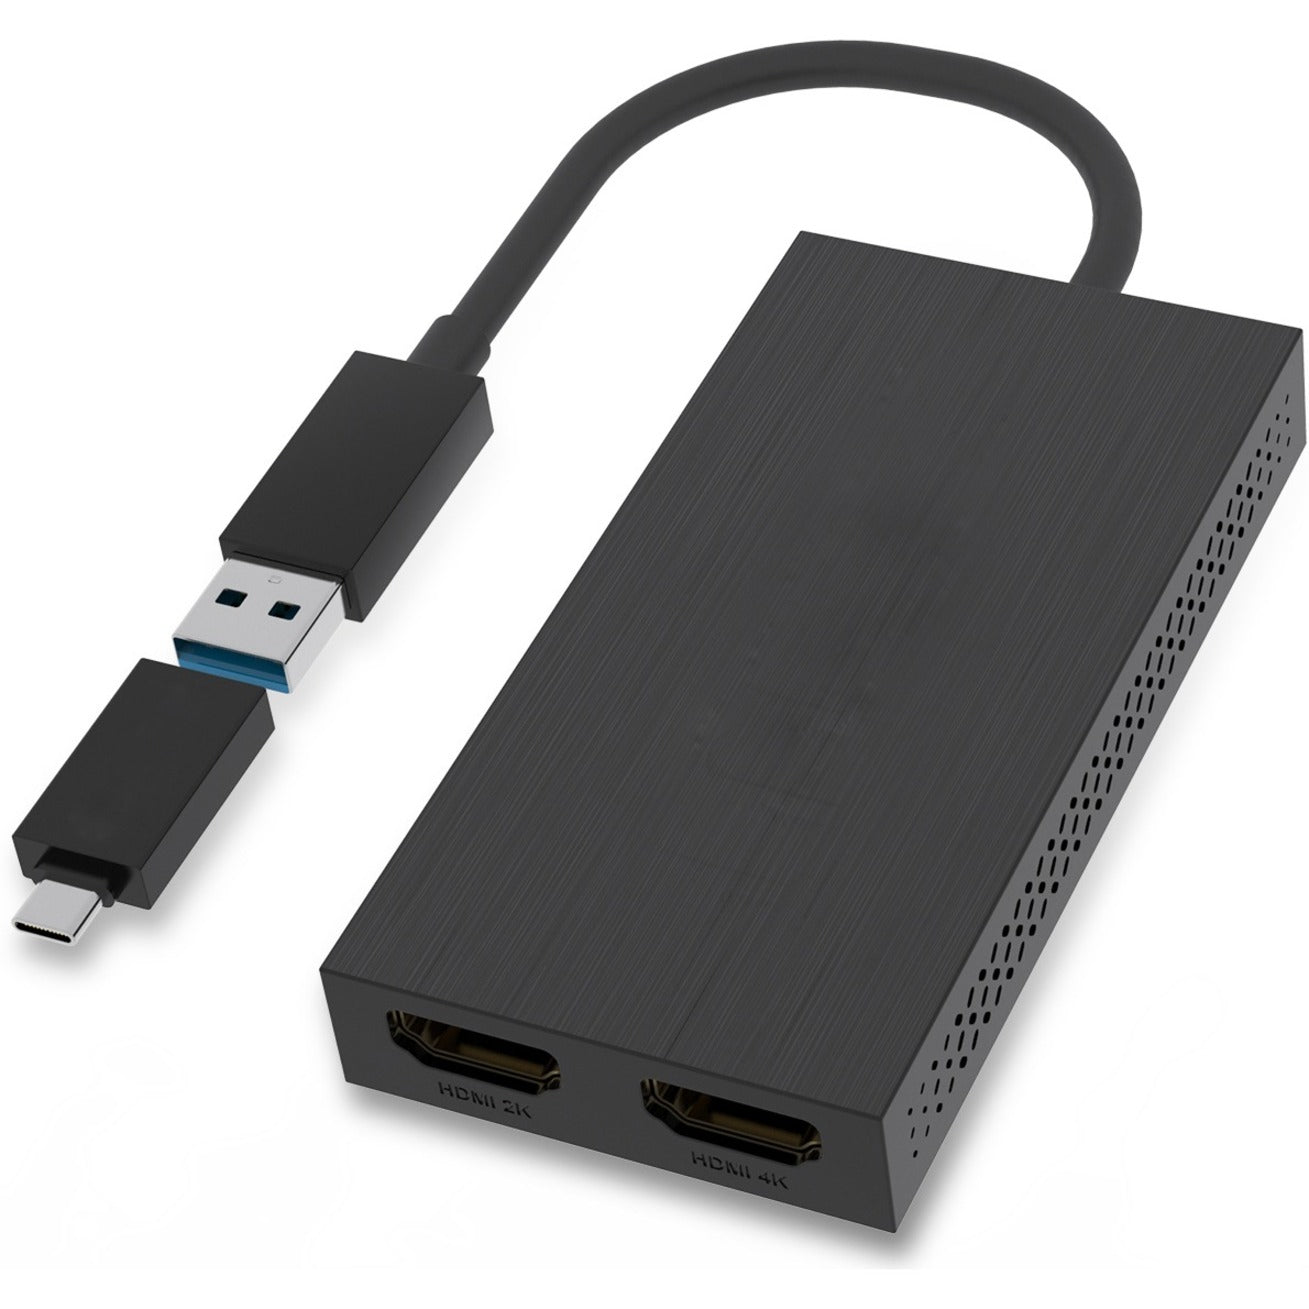 4XEM 4XUG7602H USB 3.0 to Dual HDMI 4K Display Adapter, LED Indicator, Plug and Play